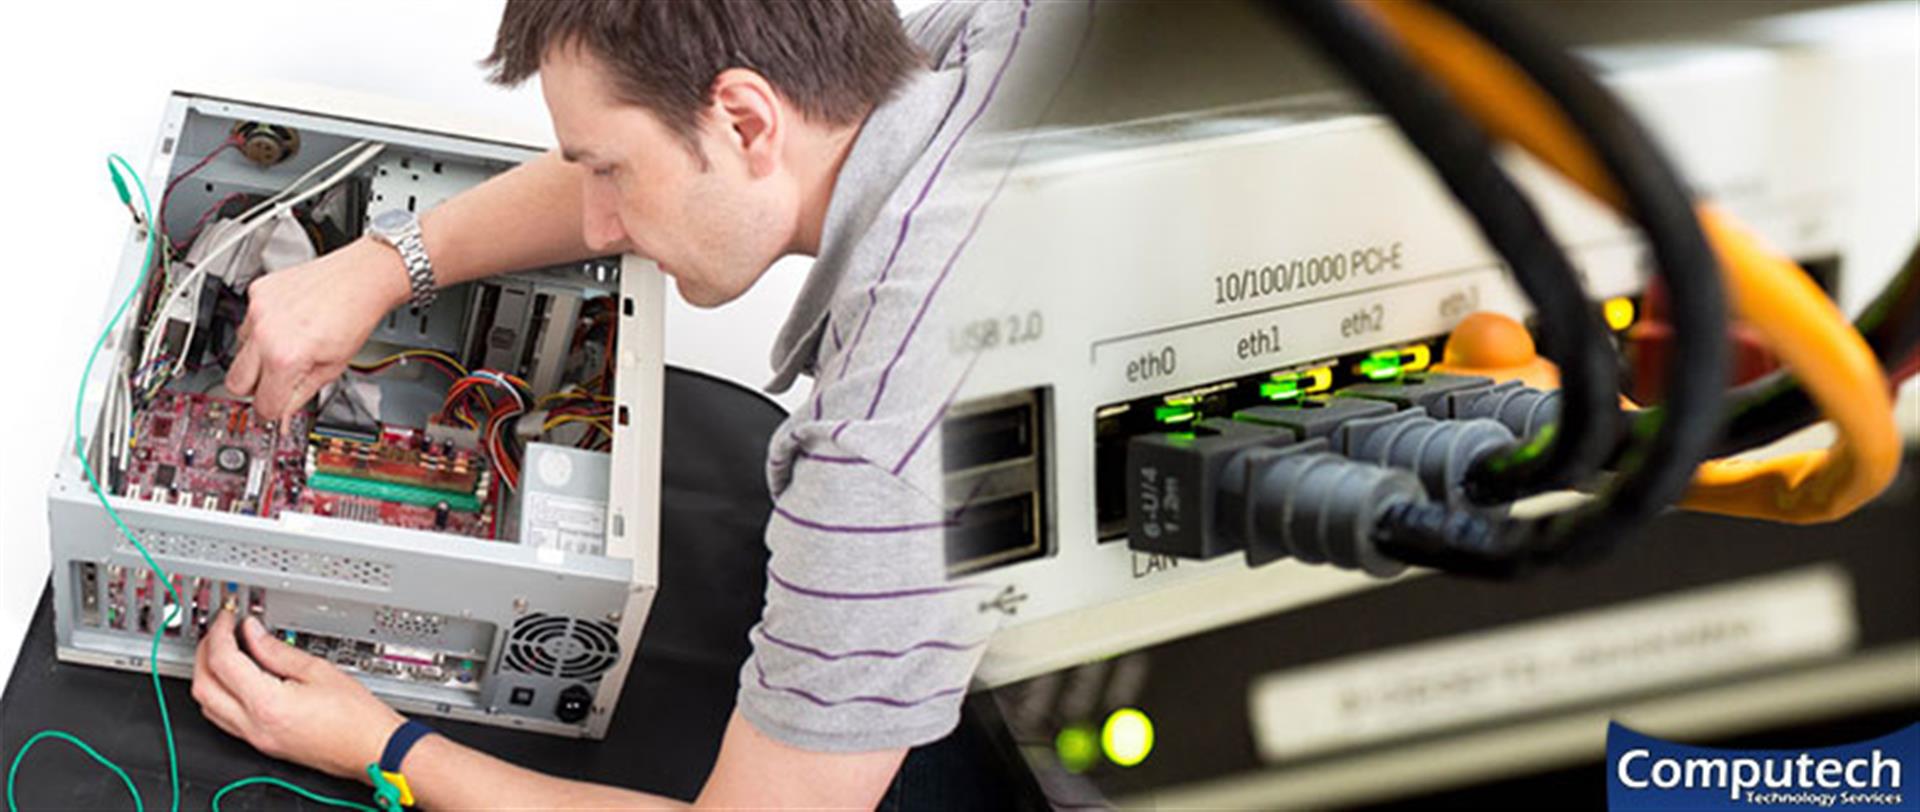 Staunton Virginia On-Site PC & Printer Repairs, Networks, Voice & Data Cabling Services